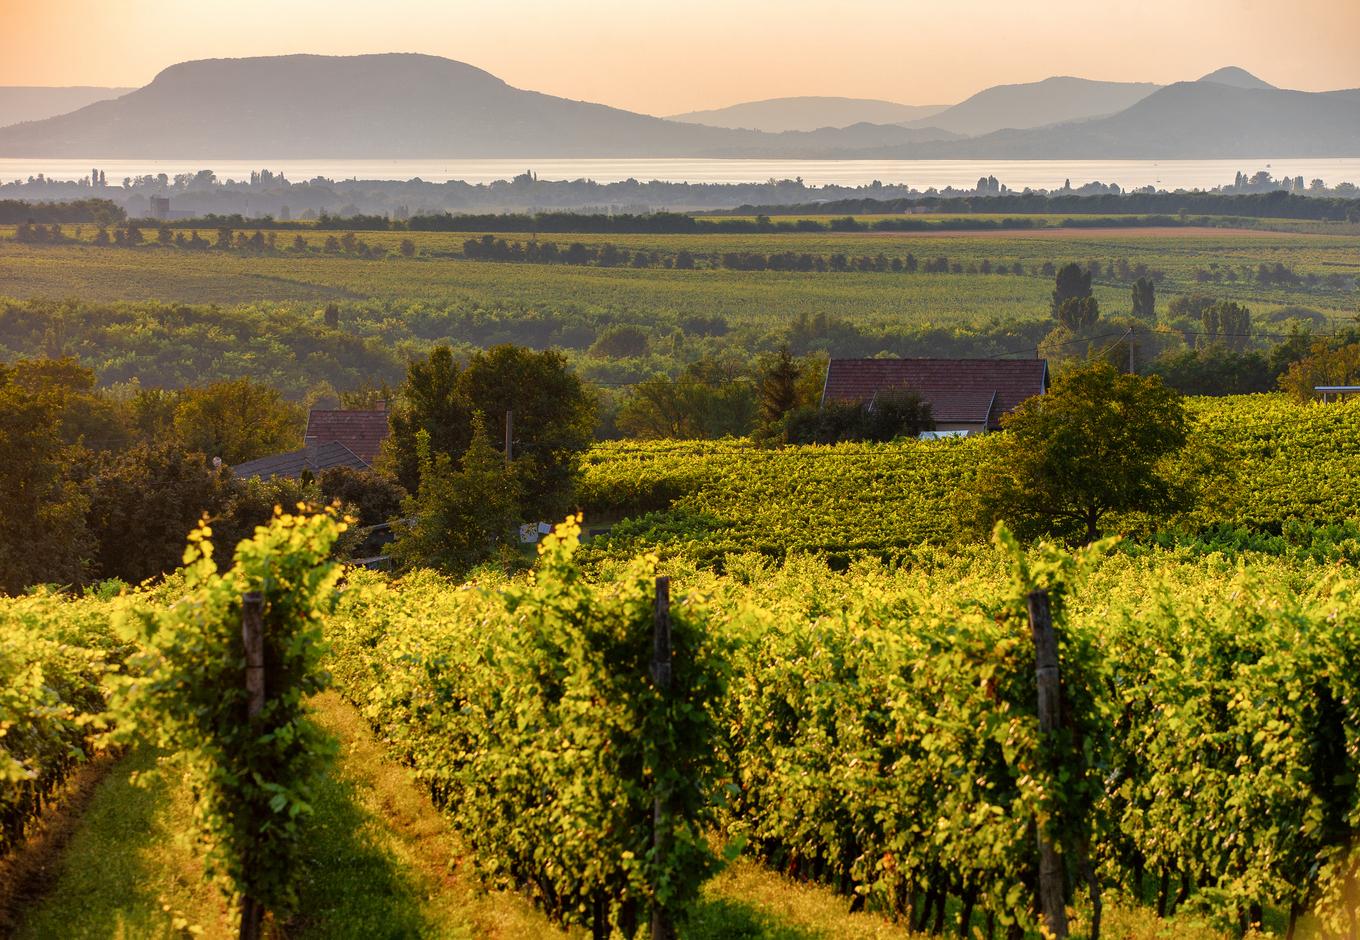 The Badacsony mountain with Lake Balaton and a vineyard, in Hungary